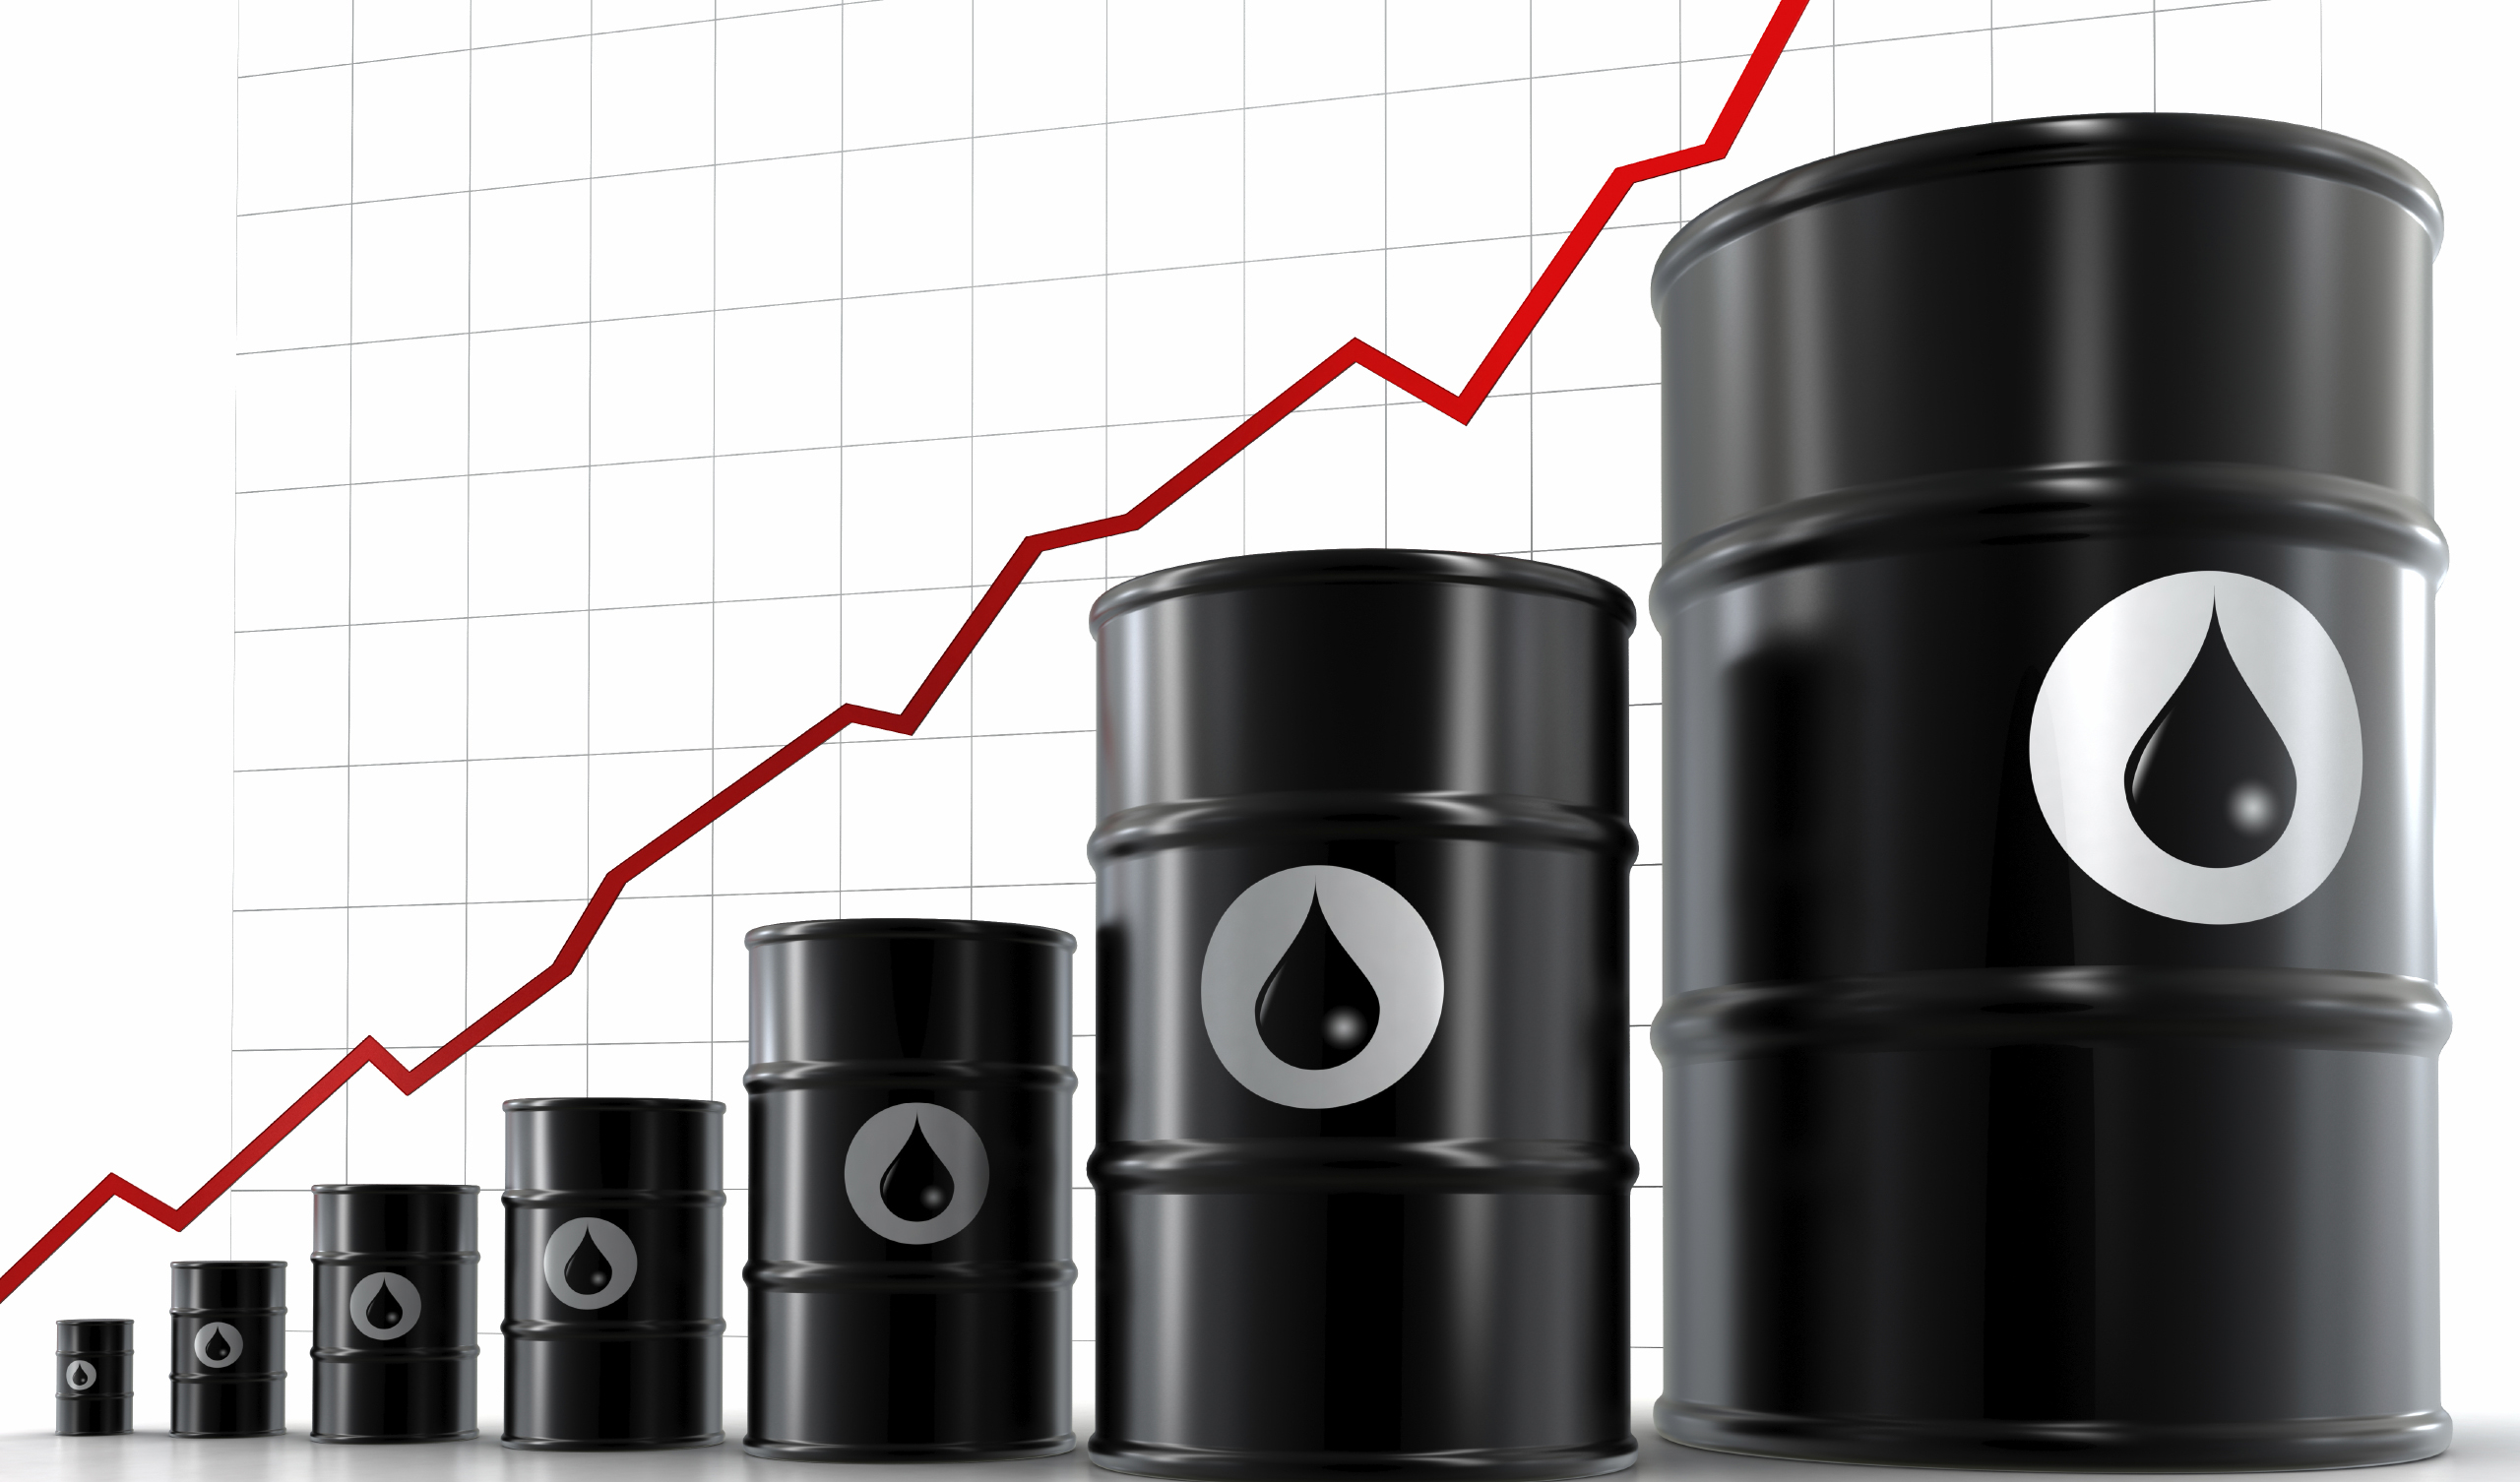 روند افزایشی نفت ادامه یافت